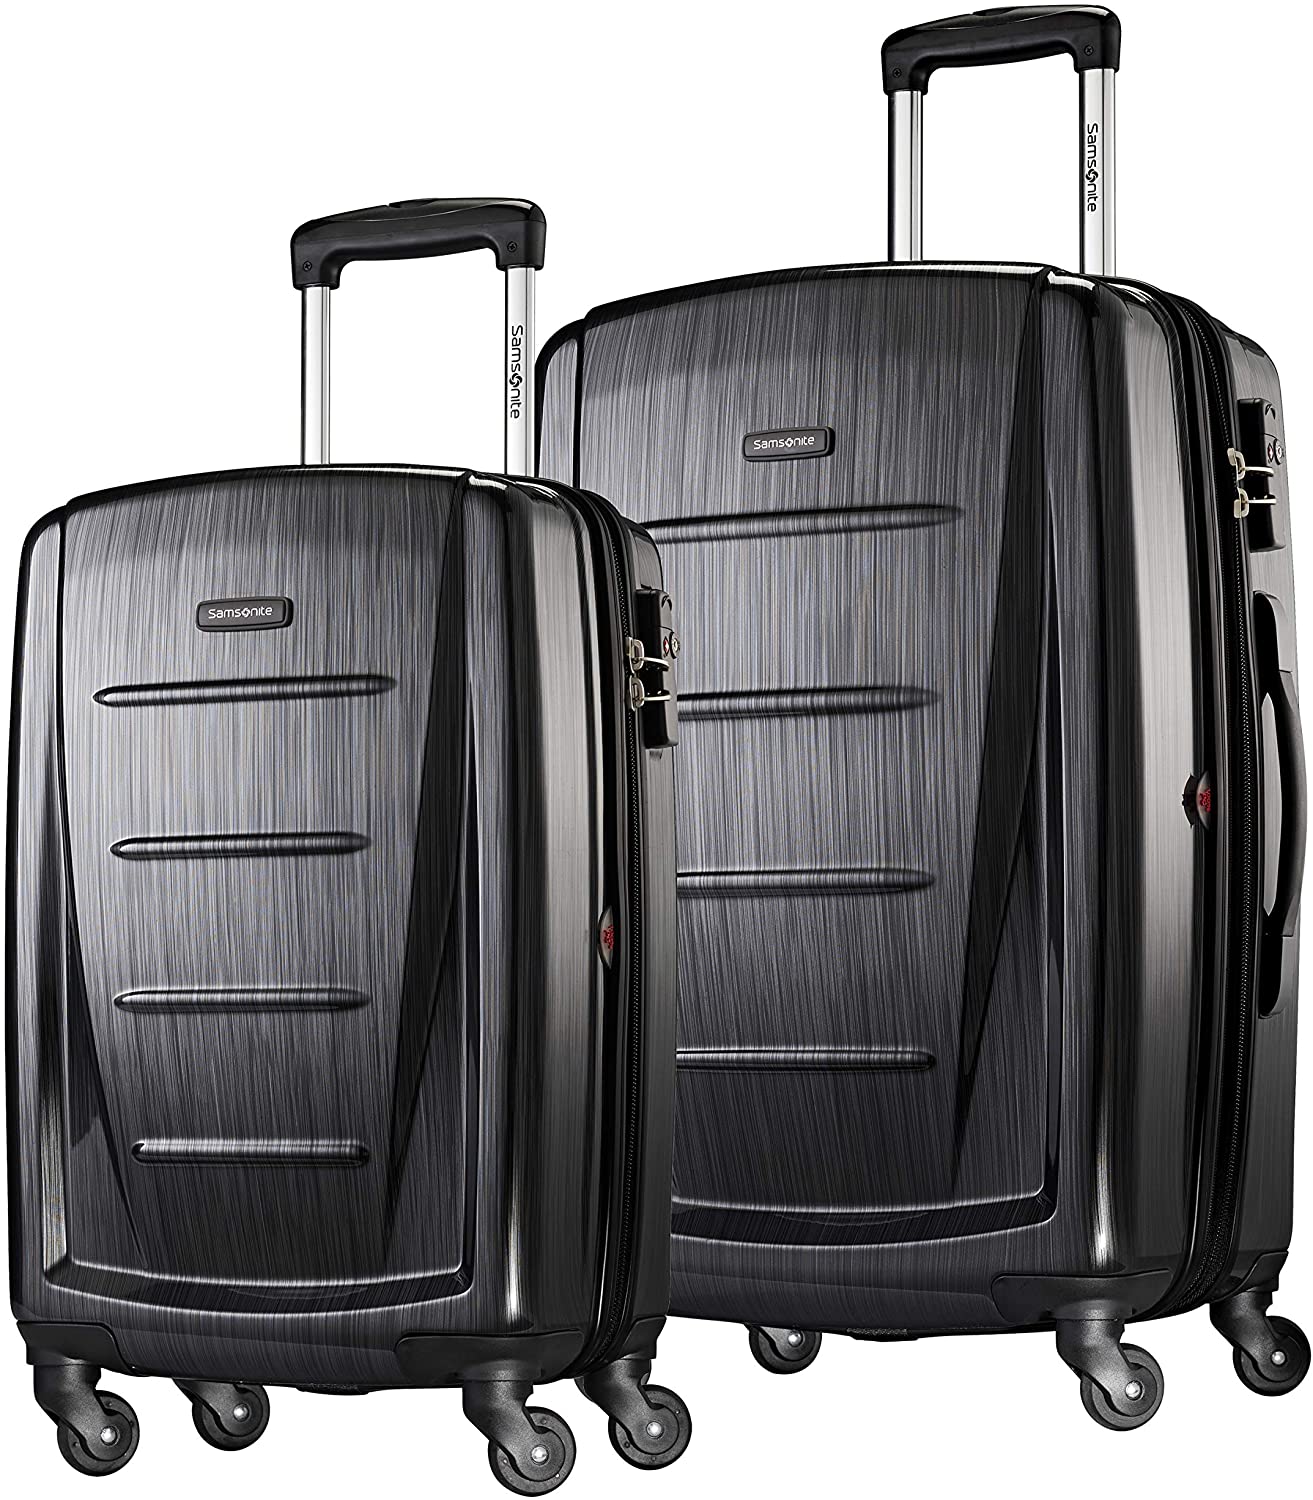 Black Friday Luggage Deals! Save up to 50 on Samsonite Luggage at Amazon!